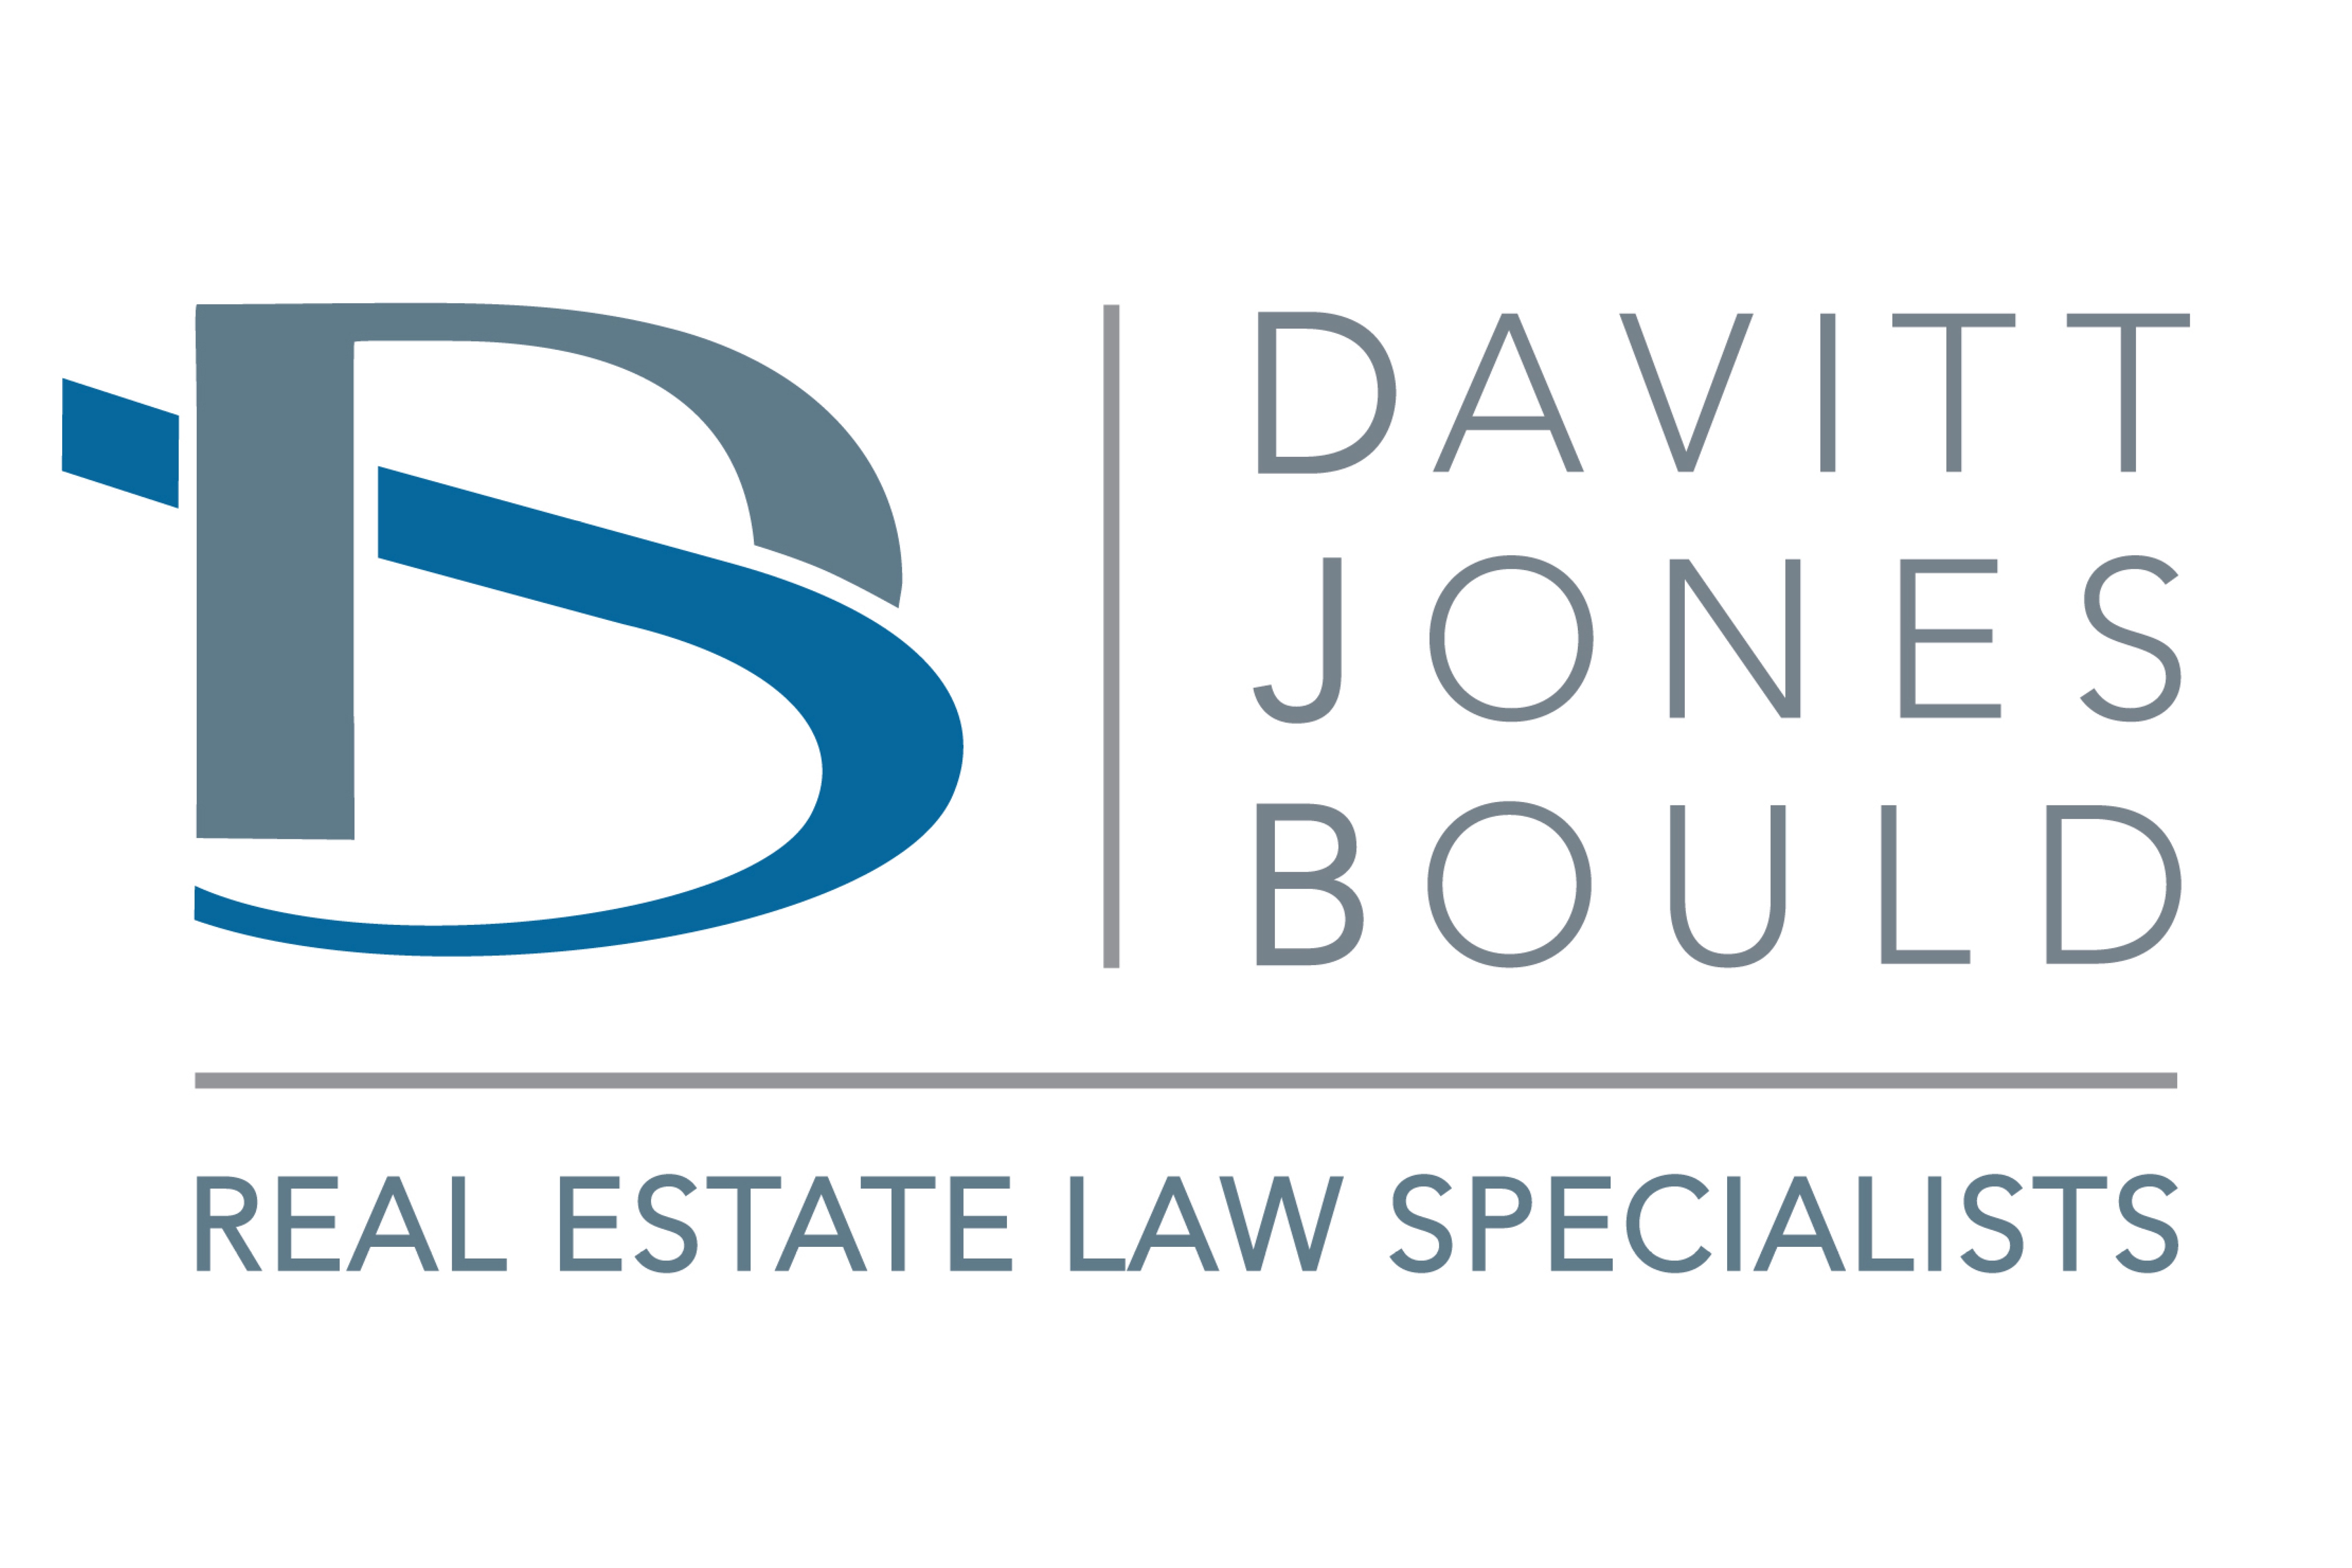 David Jones Bould  logo